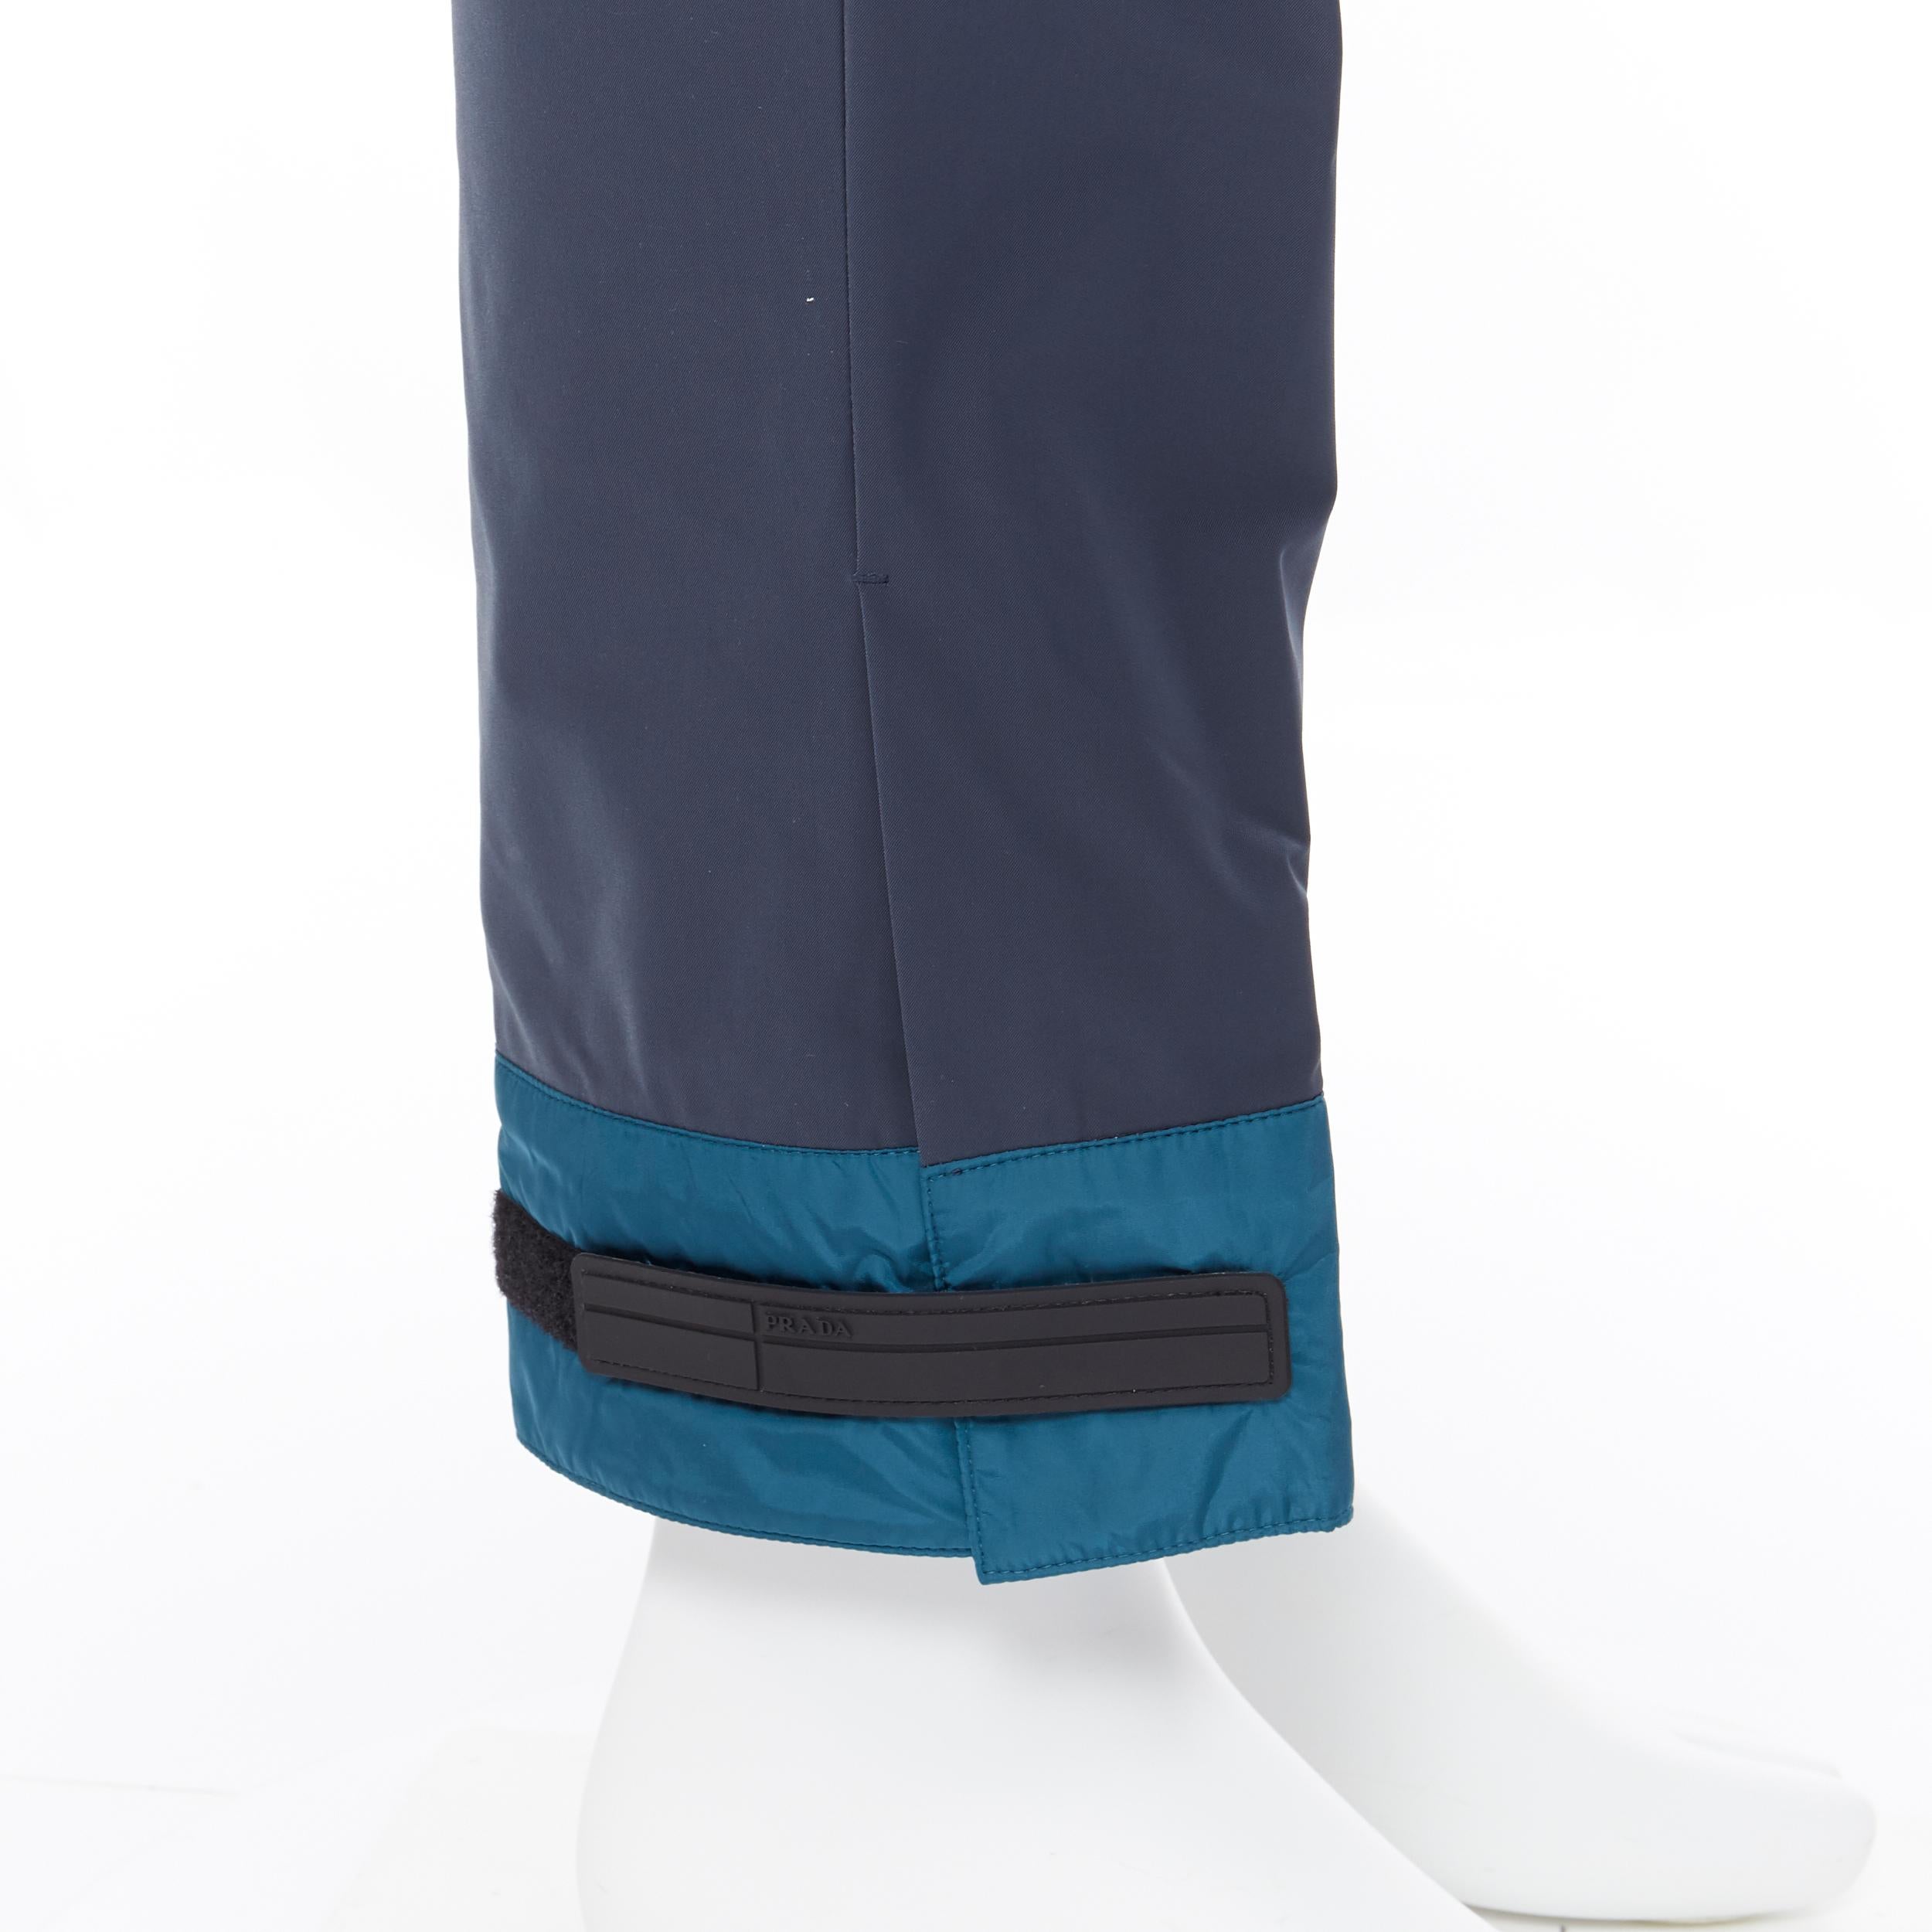 new PRADA 2018 black sportswear logo cuff hem track pants trousers IT52 XL
Brand: Prada
Designer: Miuccia Prada
Collection: Fall Winter 2018
Model Name / Style: Cuff trousers 
Material: Polyester
Color: Blue
Pattern: Solid
Closure: Zip
Extra Detail: